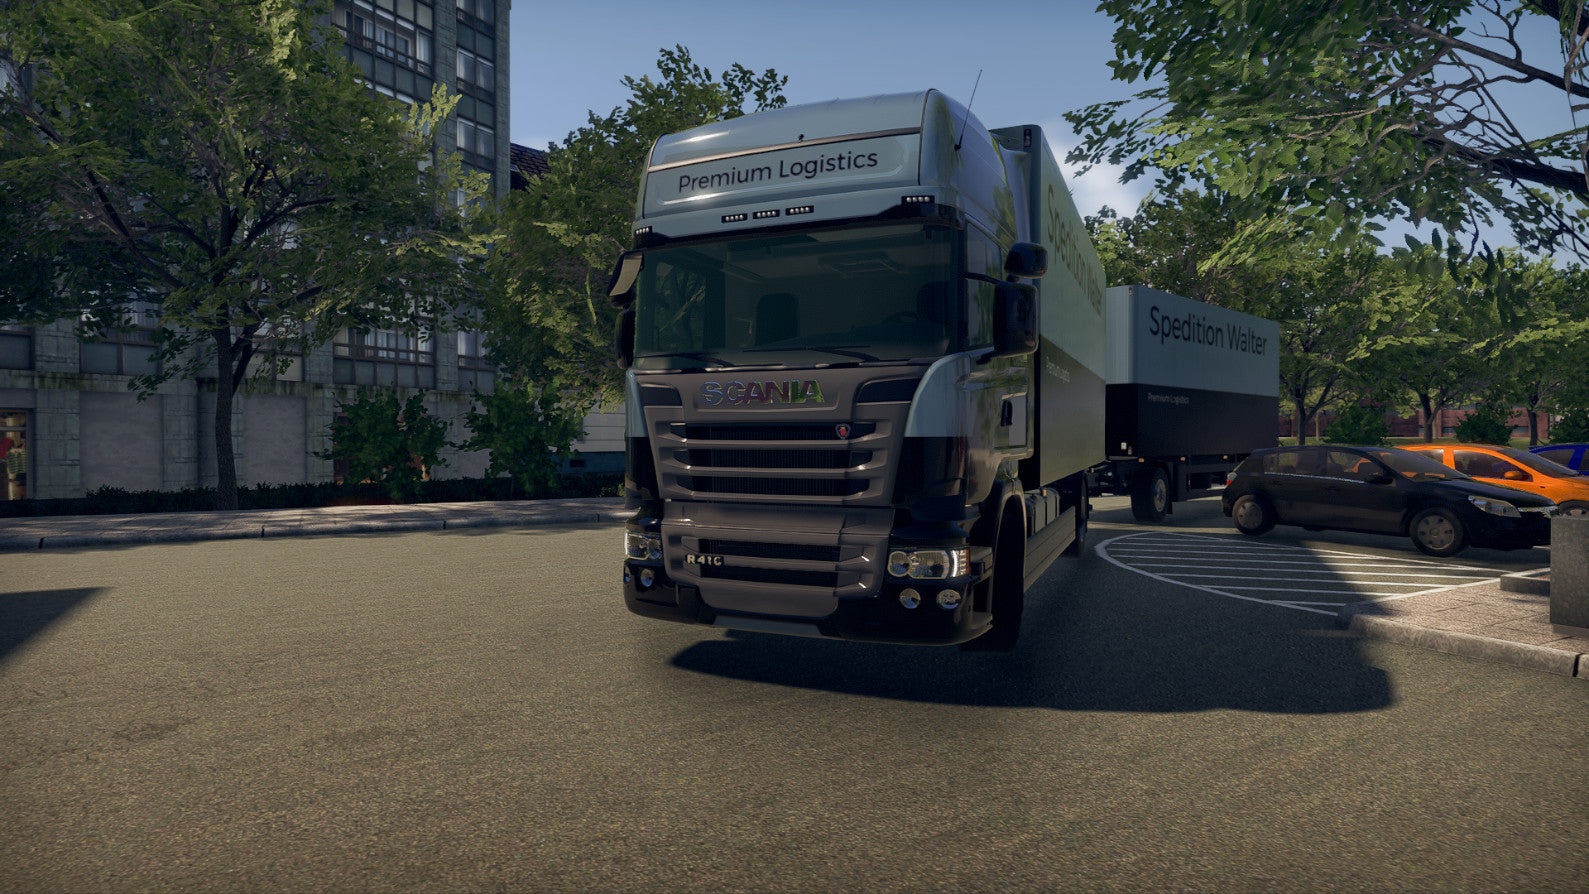 Truck Simulator Ps4